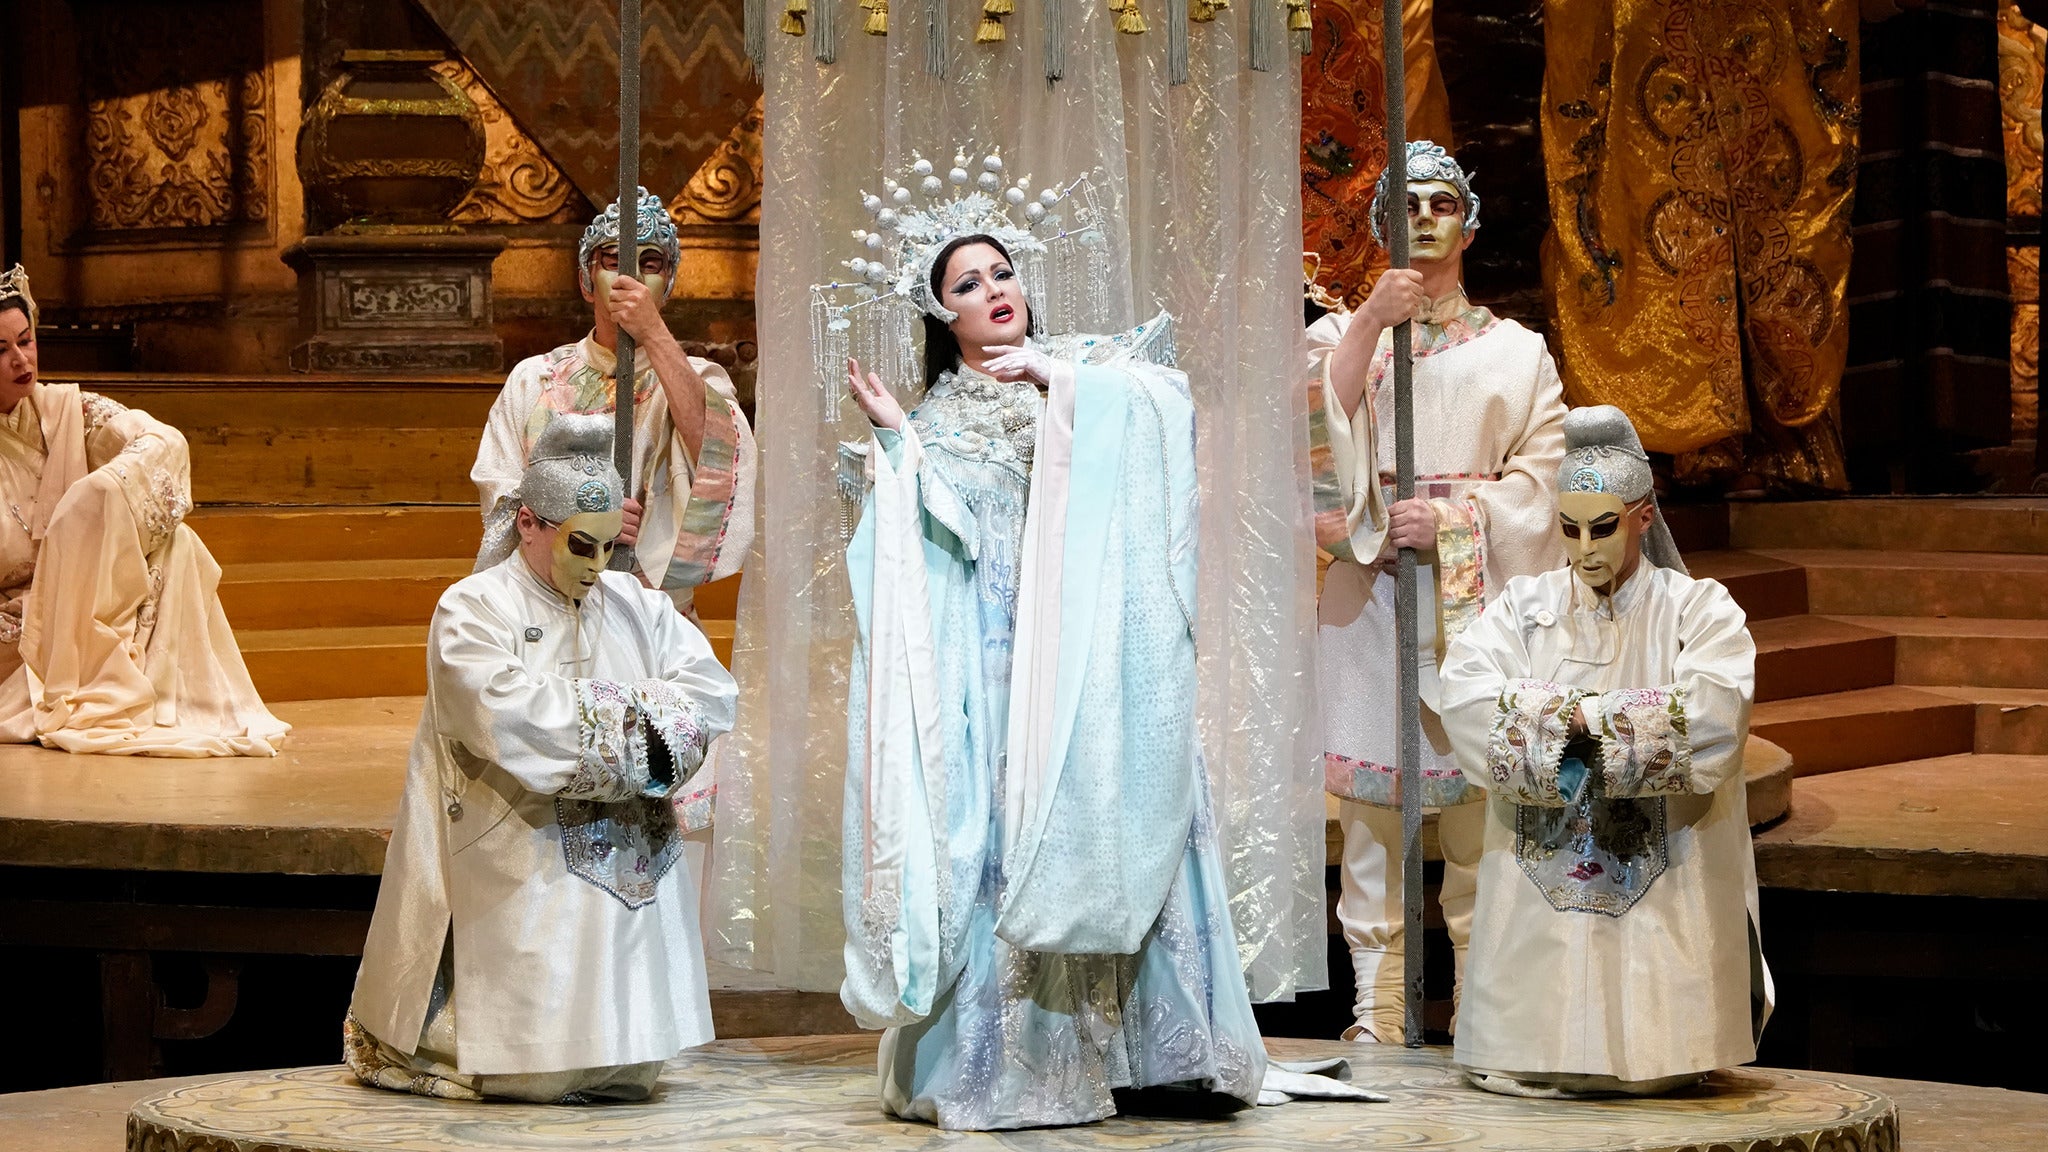 Turandot w/ Metropolitan Opera